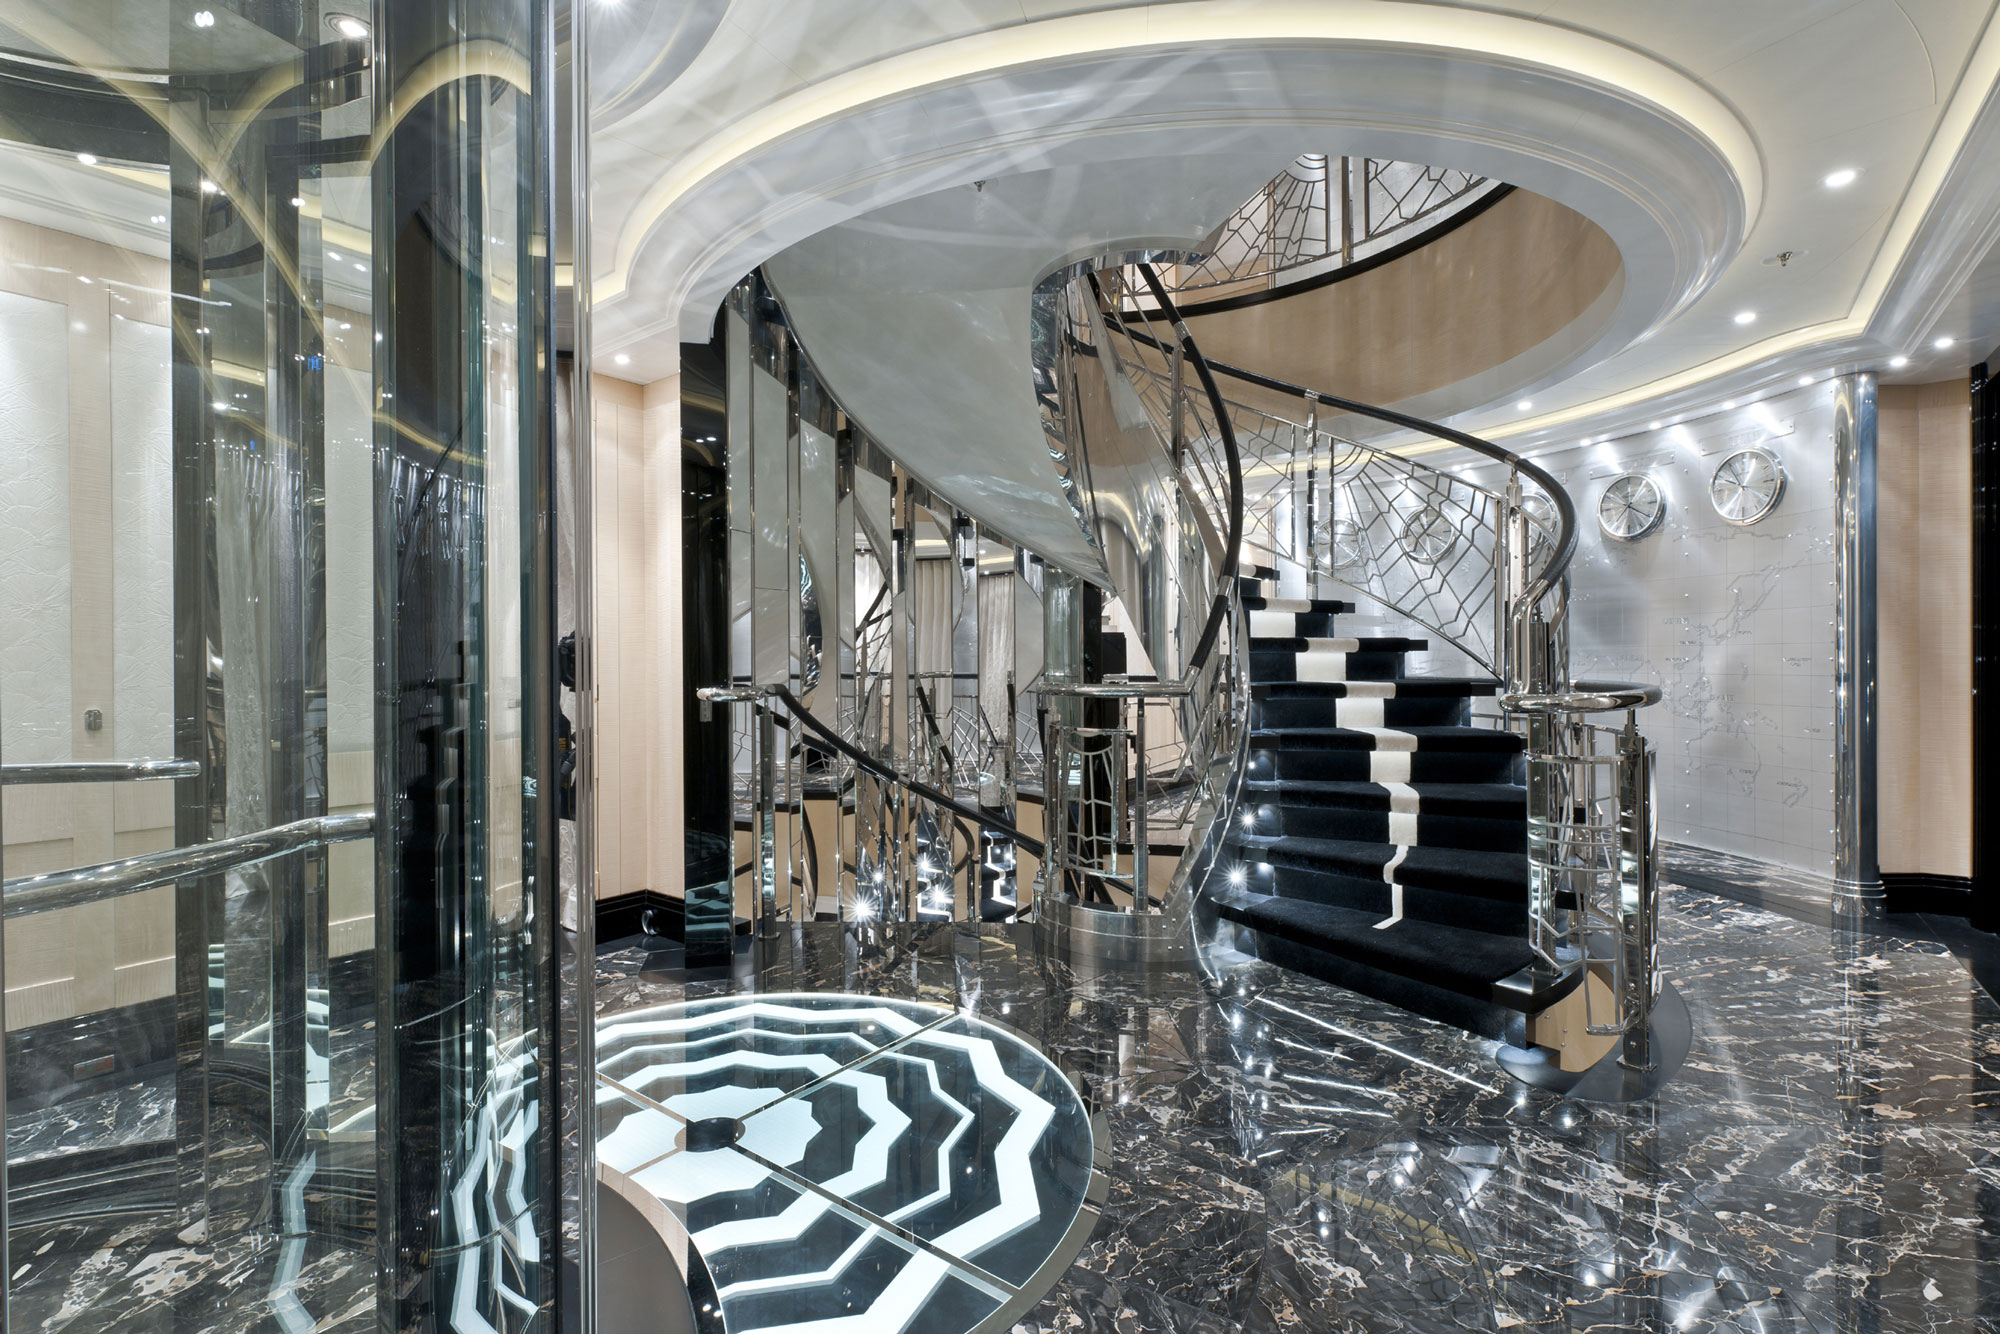 Interior Hallway With Stairwell - Klaus Jordan